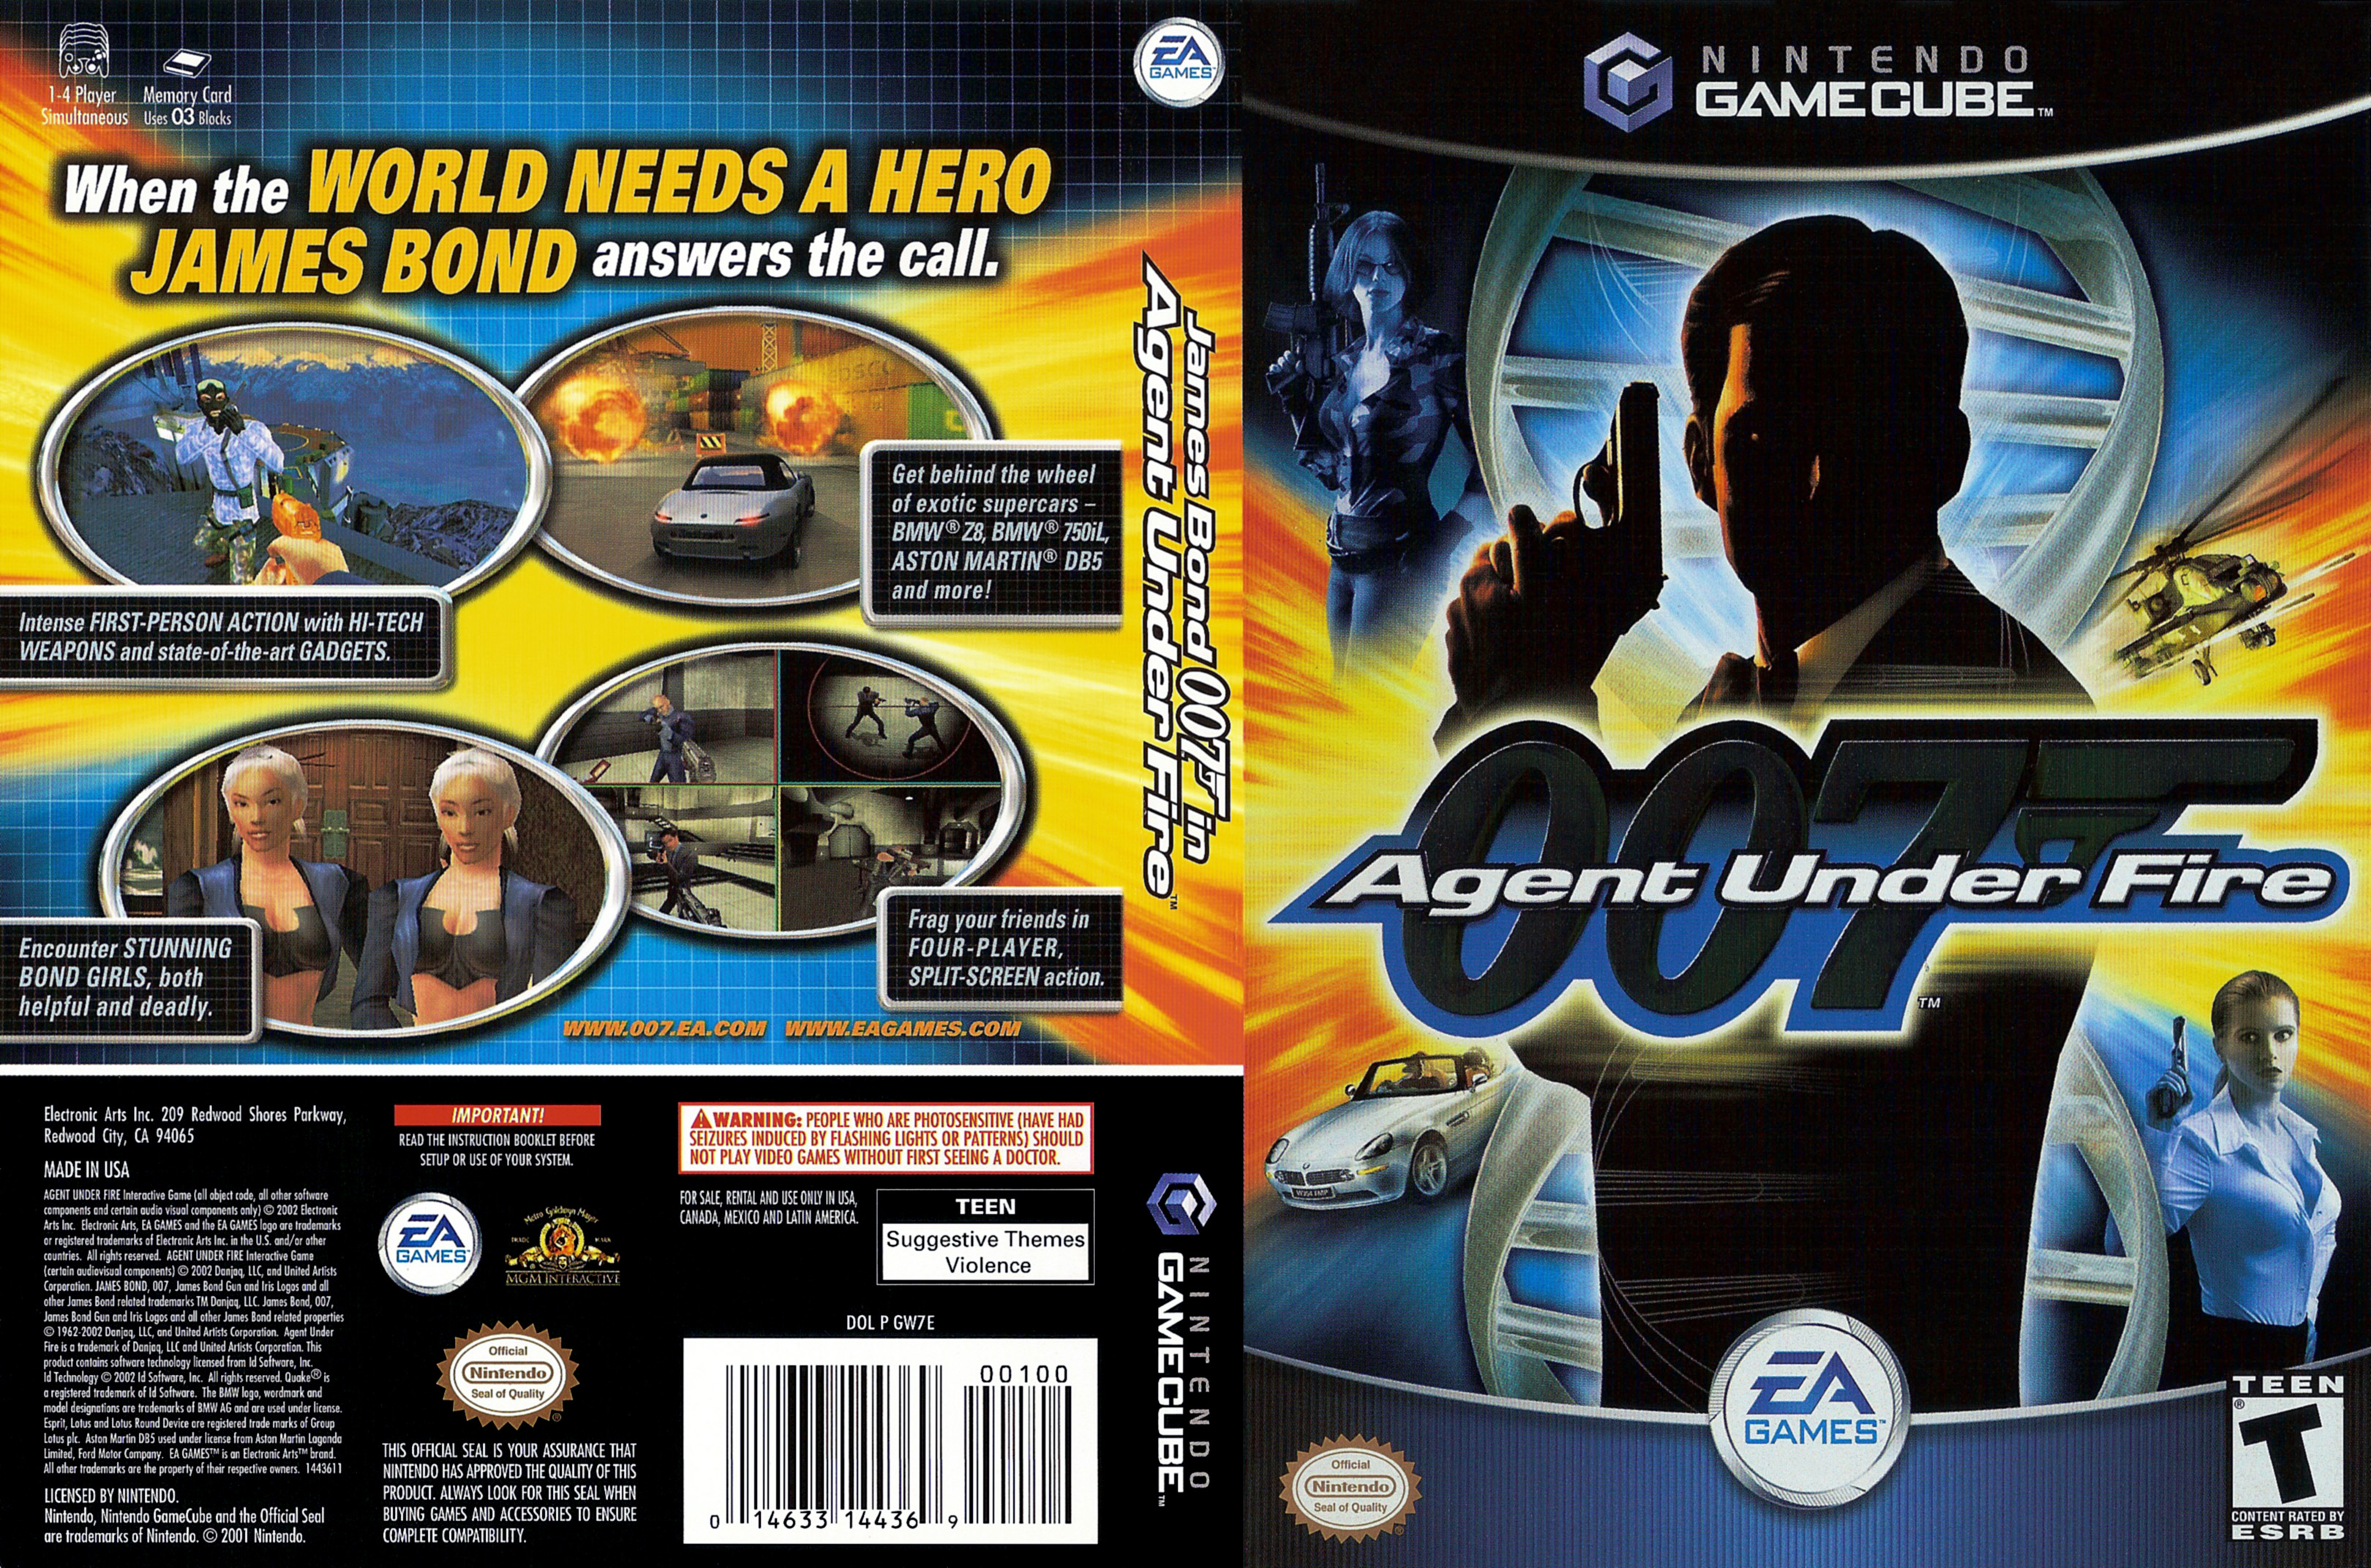 007 agent under fire v1.01 nintendo gamecube rom